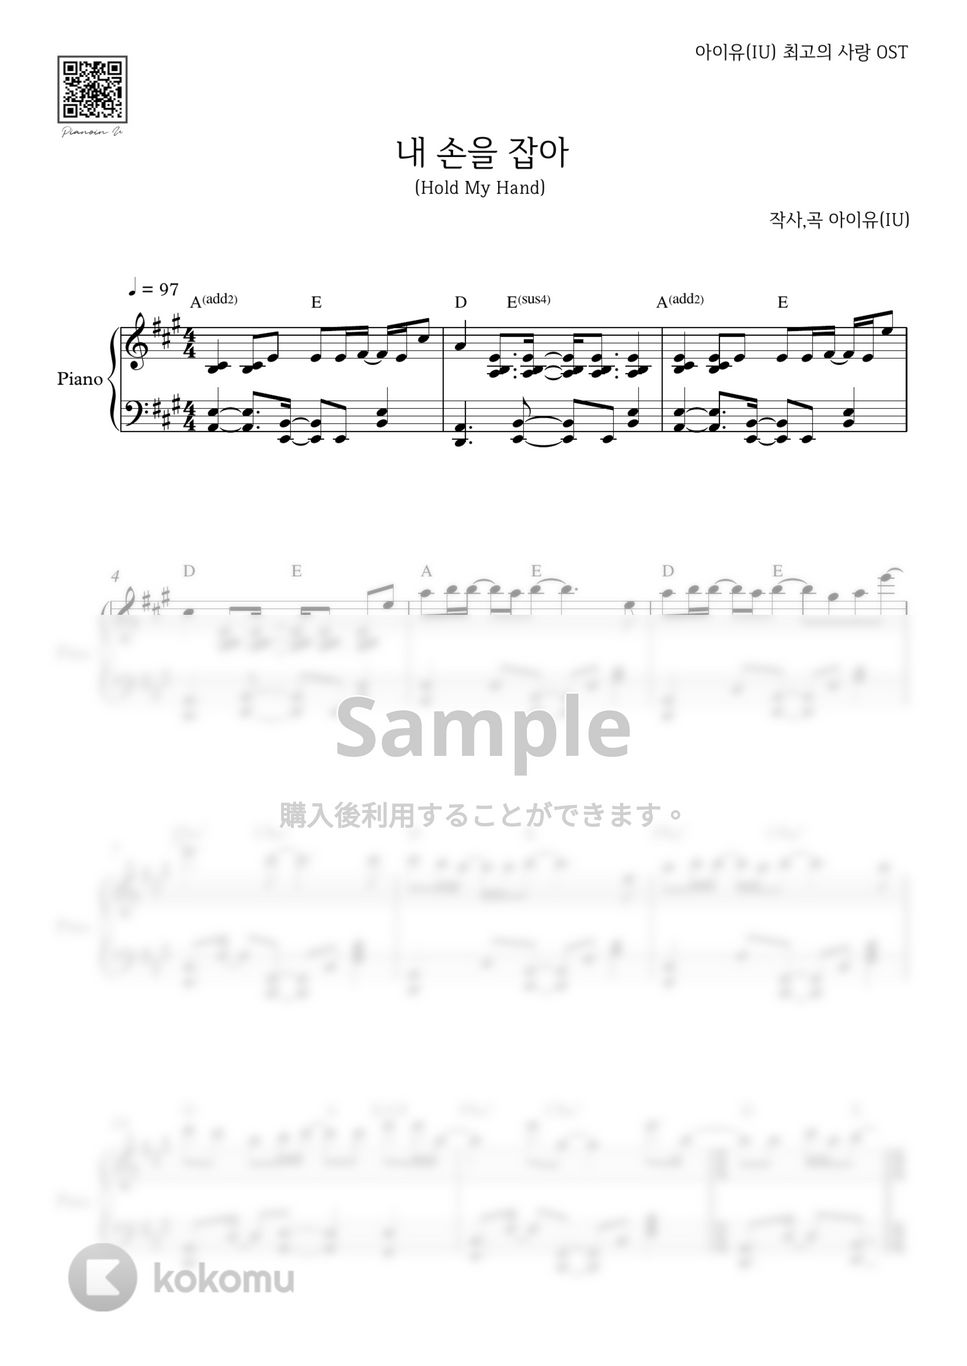 IU - 私の手を握って (最高の愛OST) by PIANOiNU